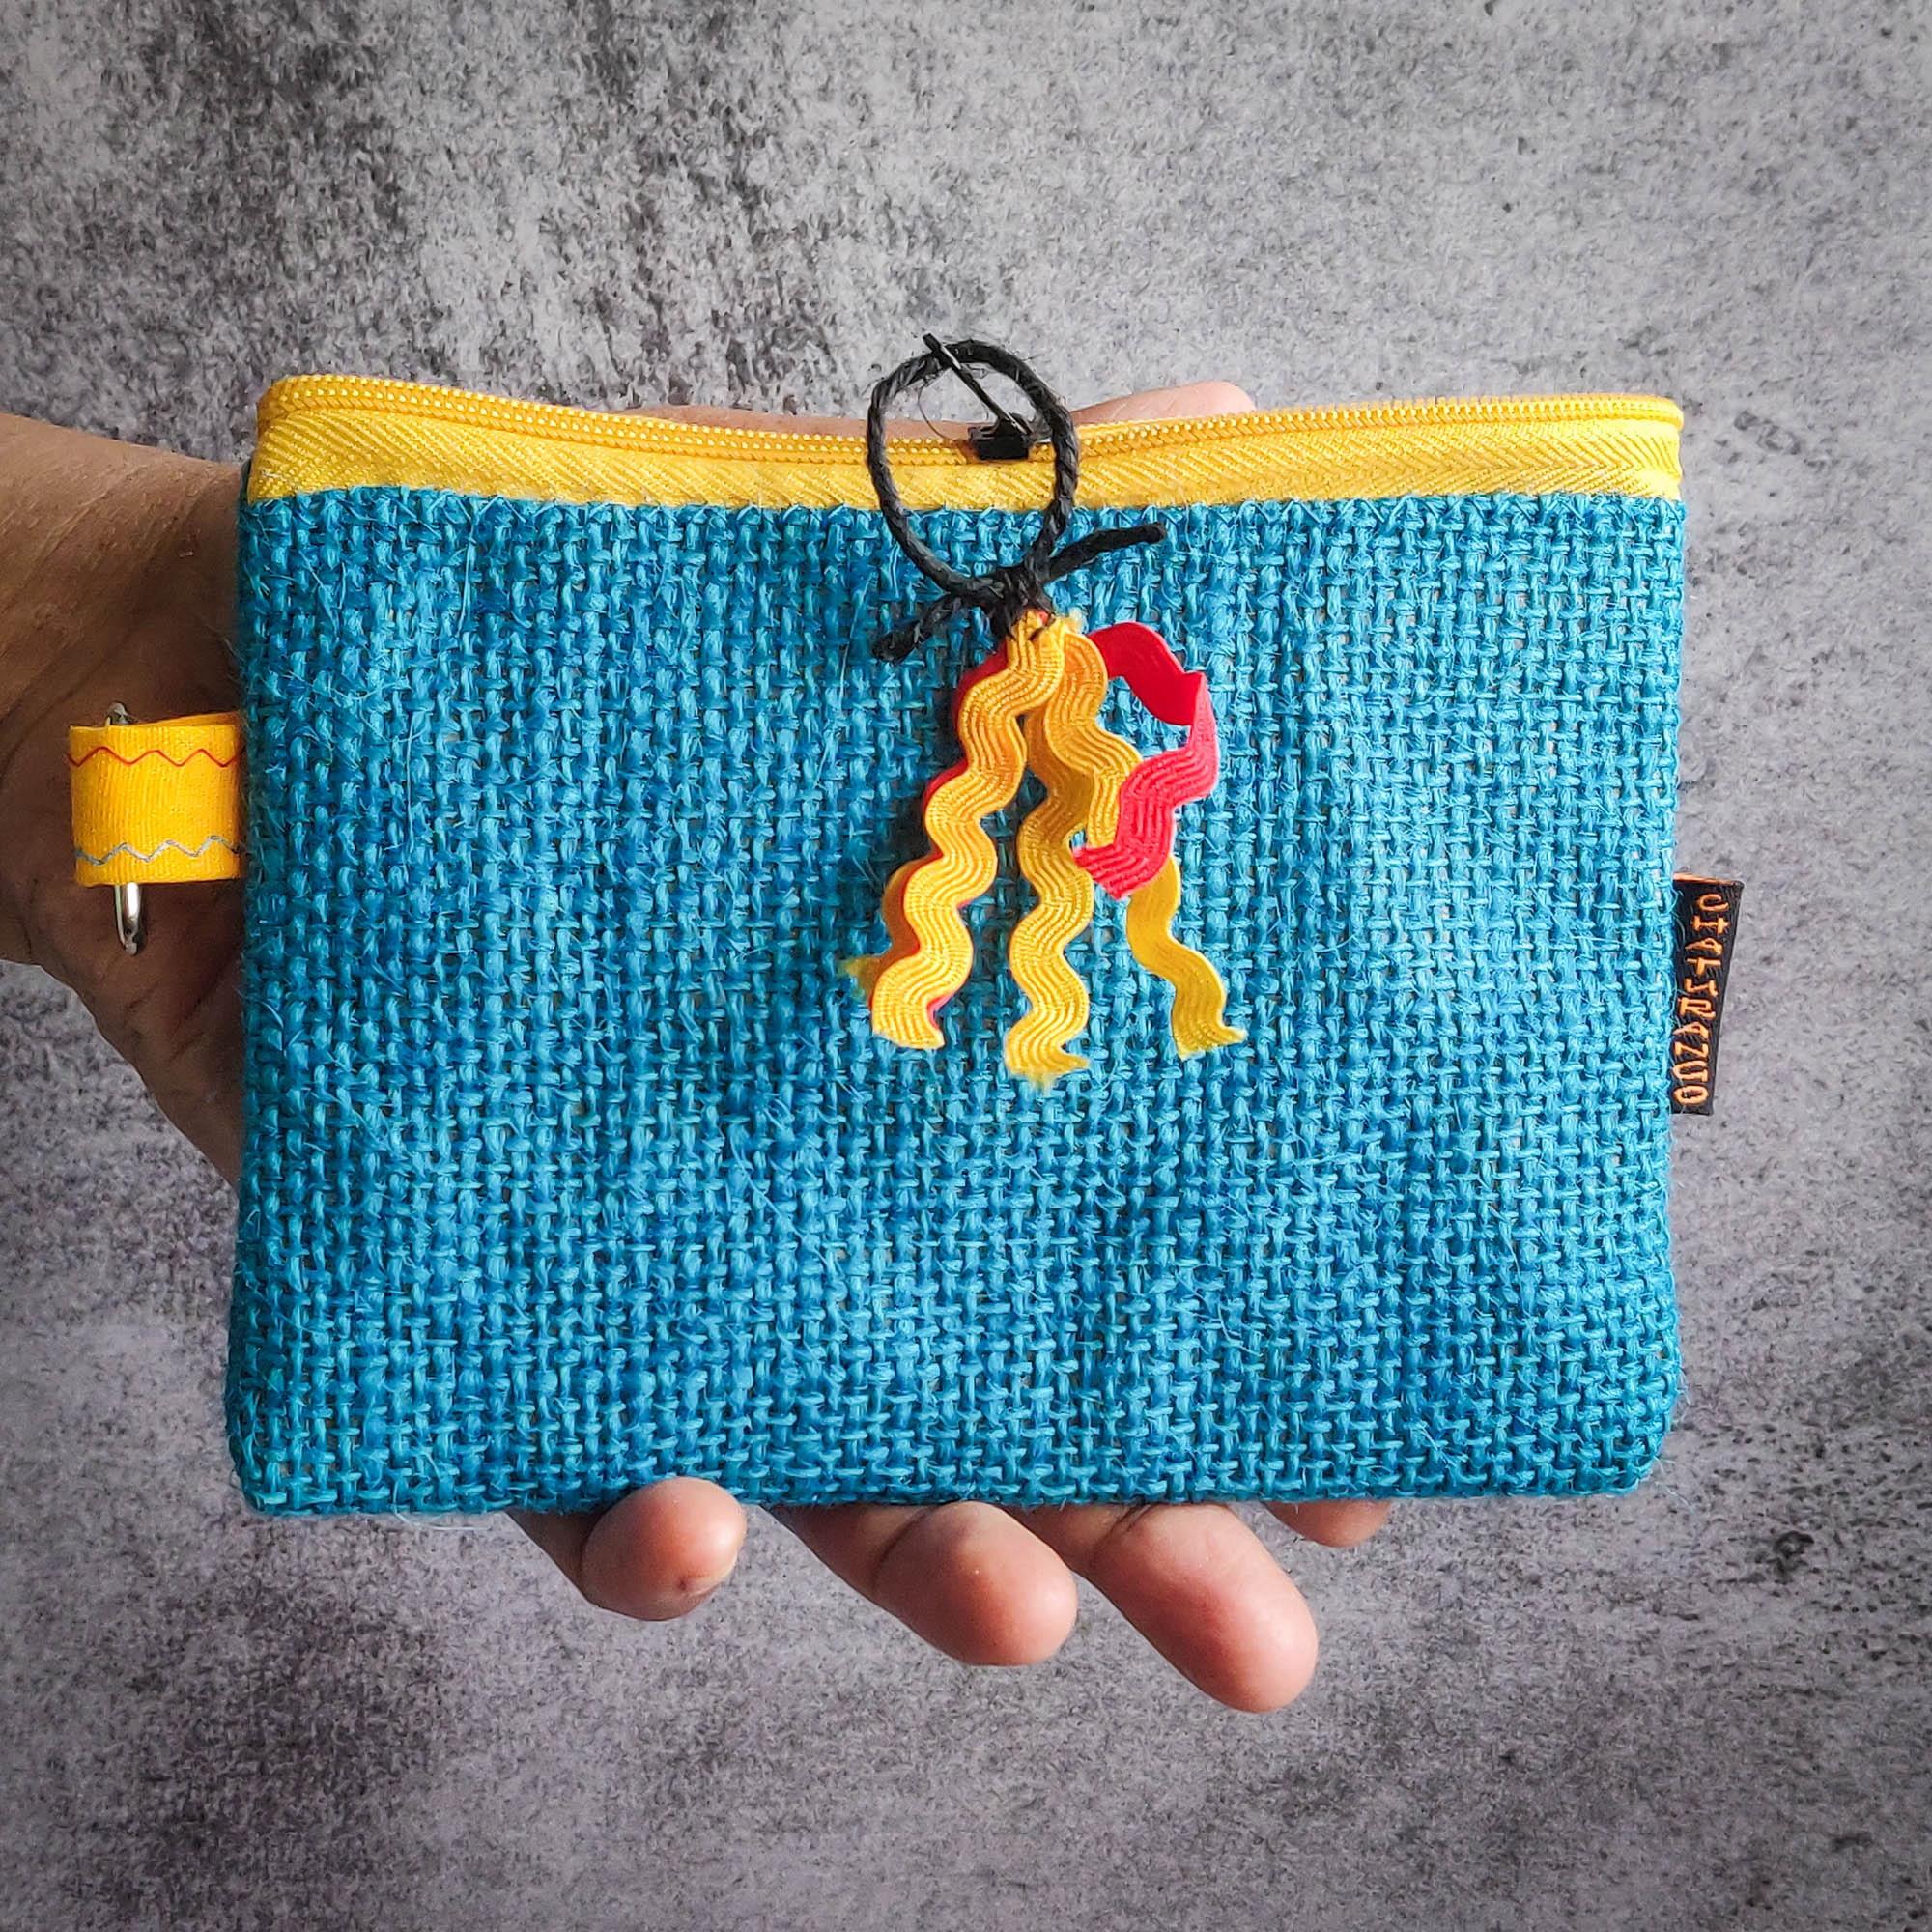 Jute bag with ric rac 7 https://chaturango.com/handmade-products-care/